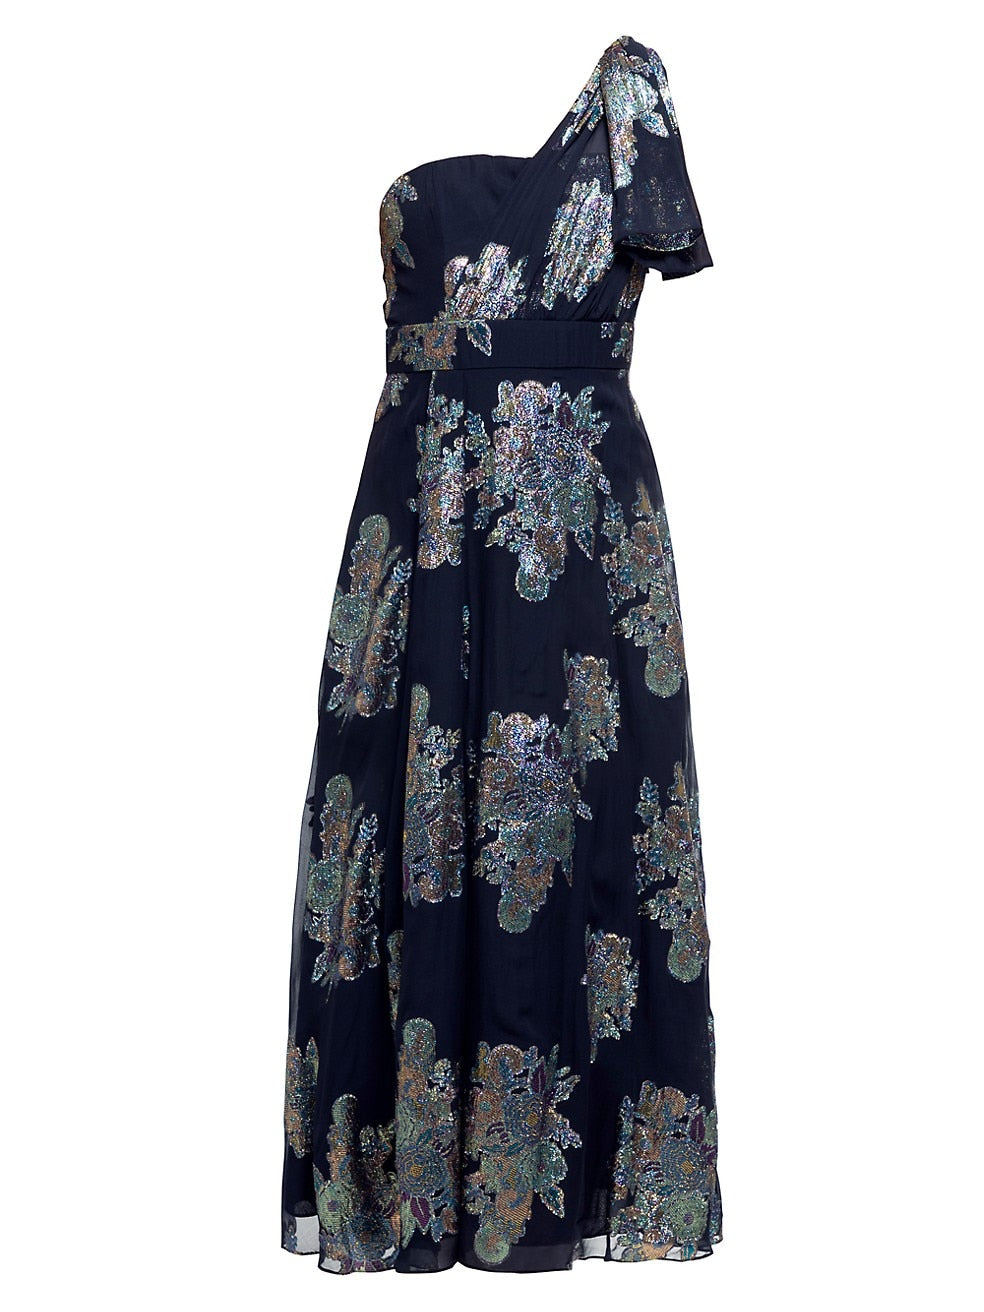 Erina Dress by Shoshanna in Navy Multi